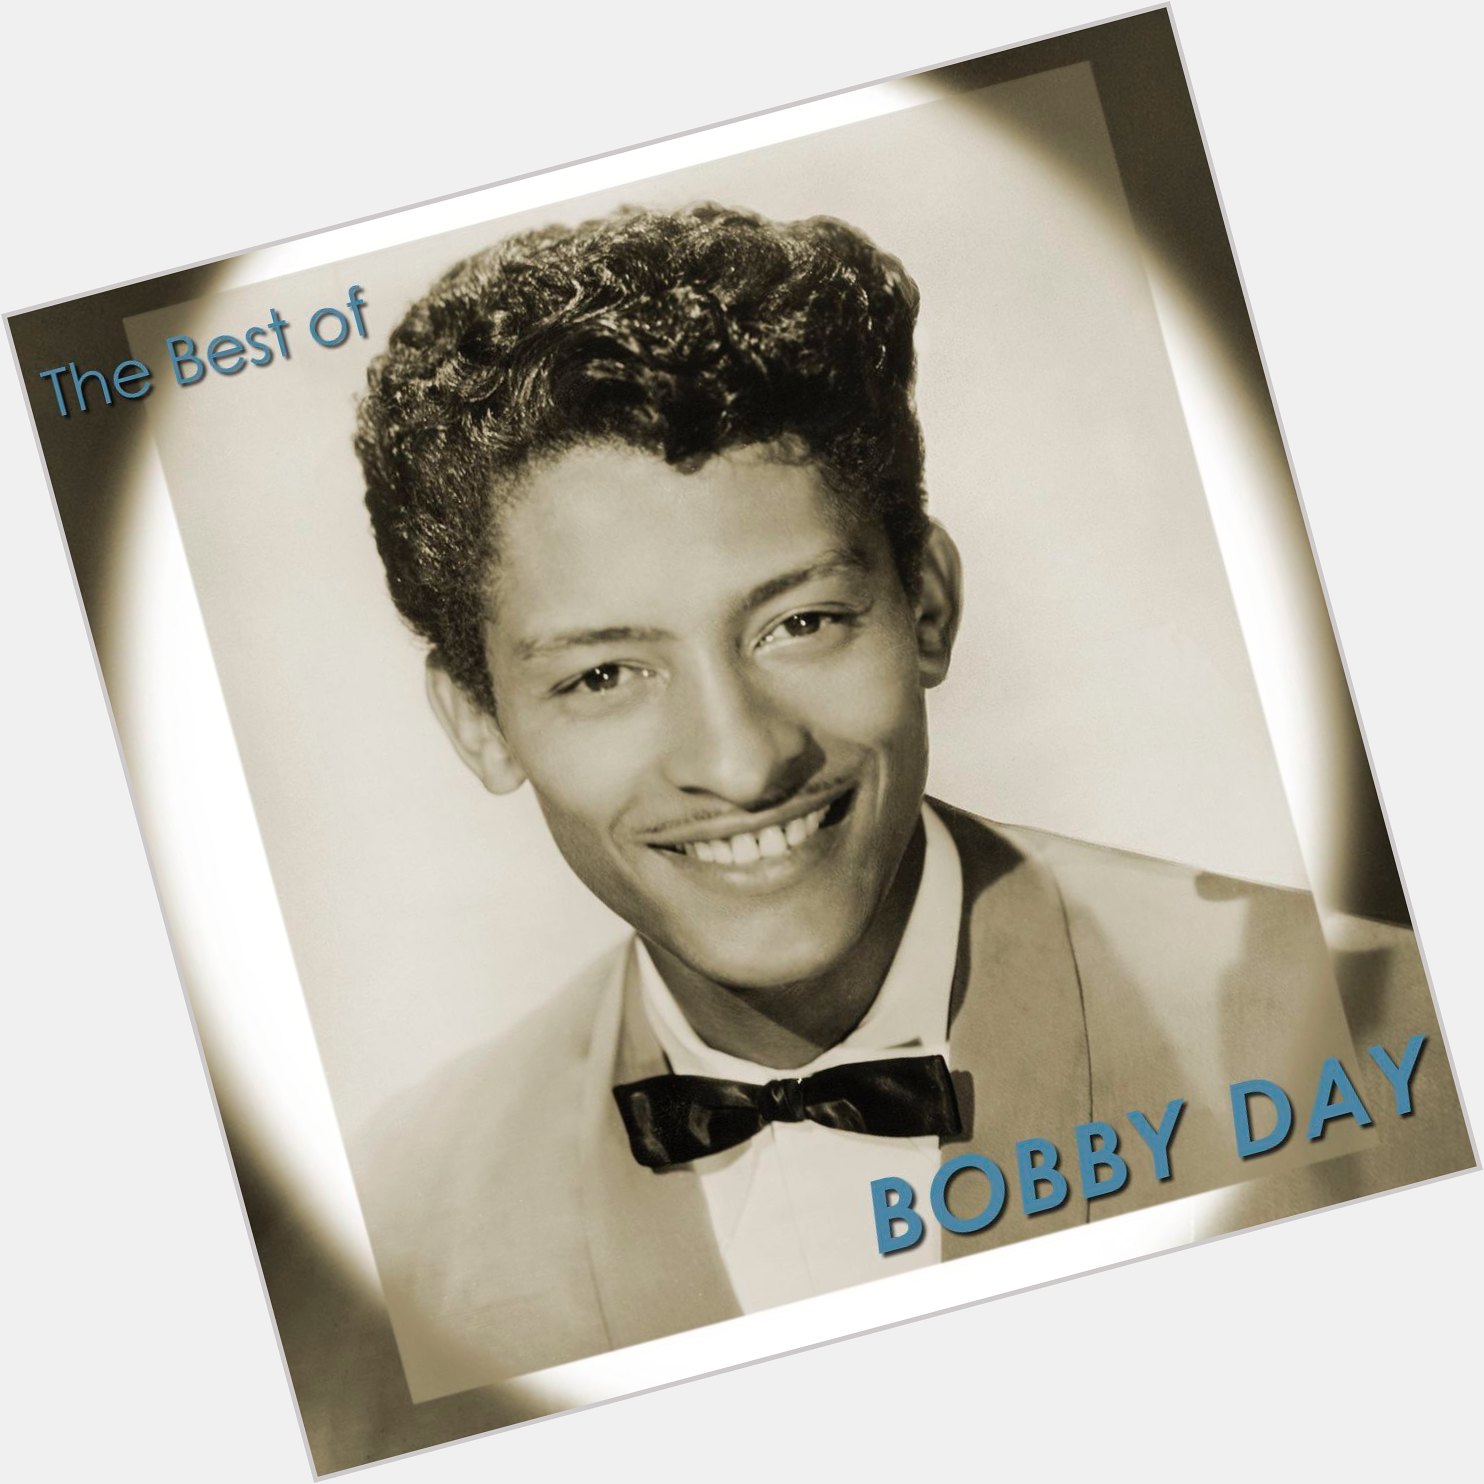 <a href="/hot-men/bobby-day/is-he-still-alive">Bobby Day</a>  